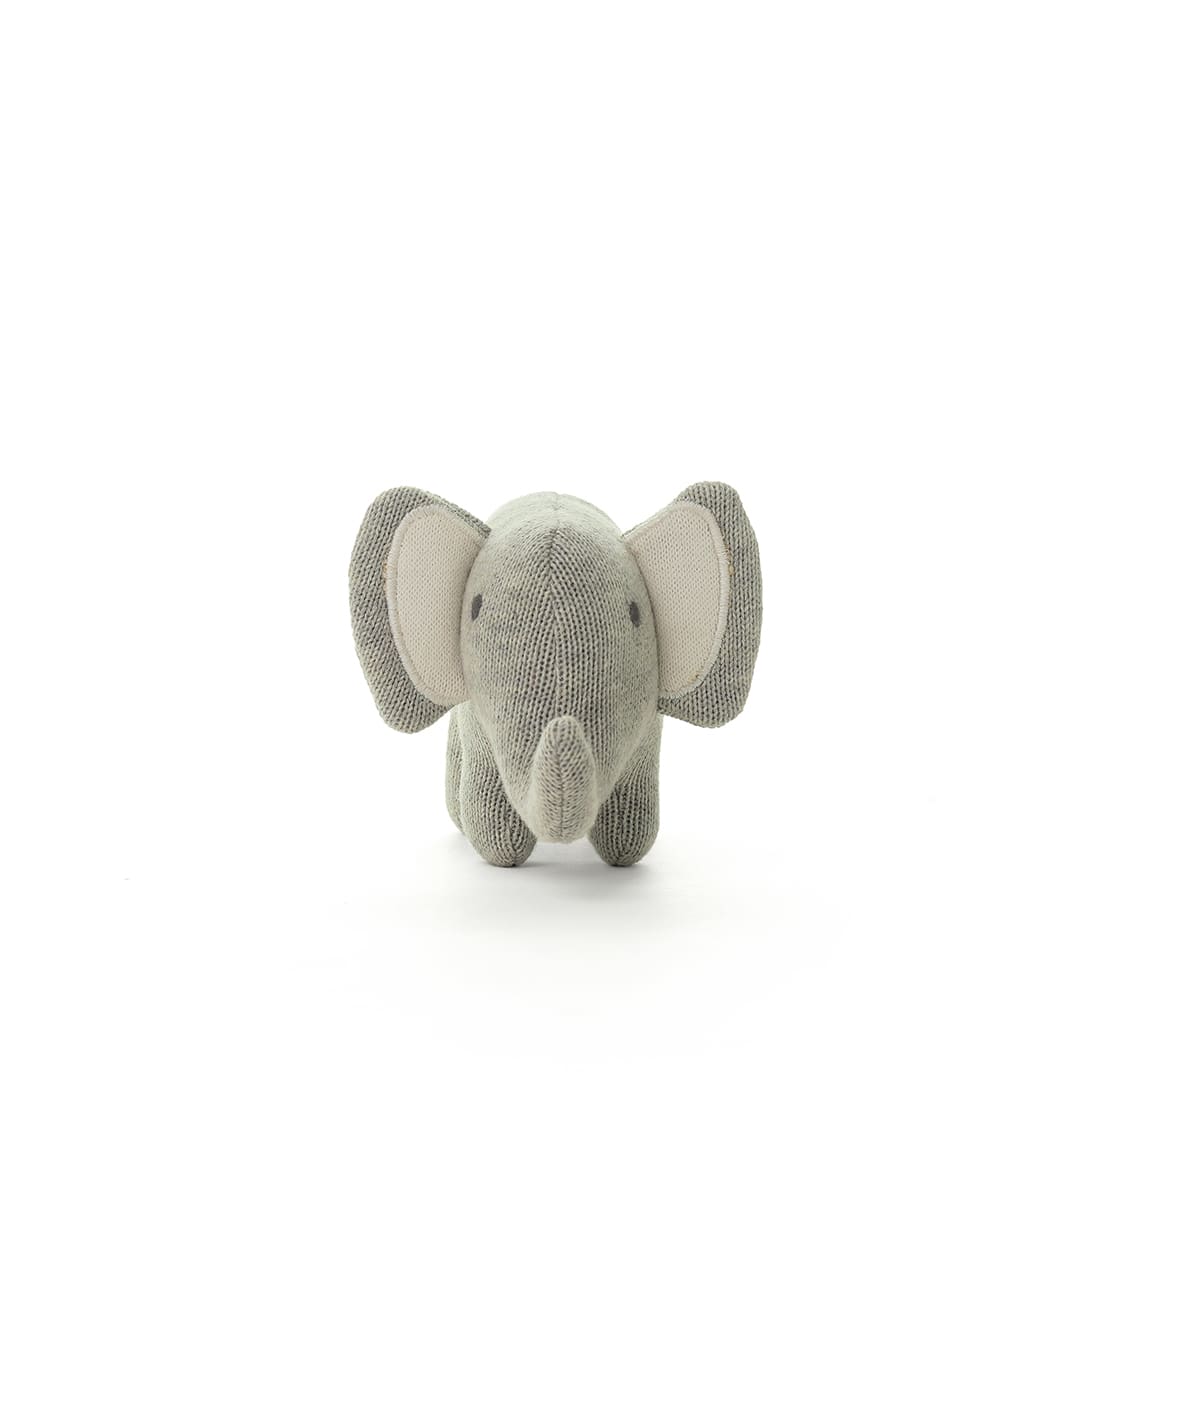 Harris the Elephant- Cotton Knitted Stuffed Soft Rattle Toy (Vanilla Grey Melange)